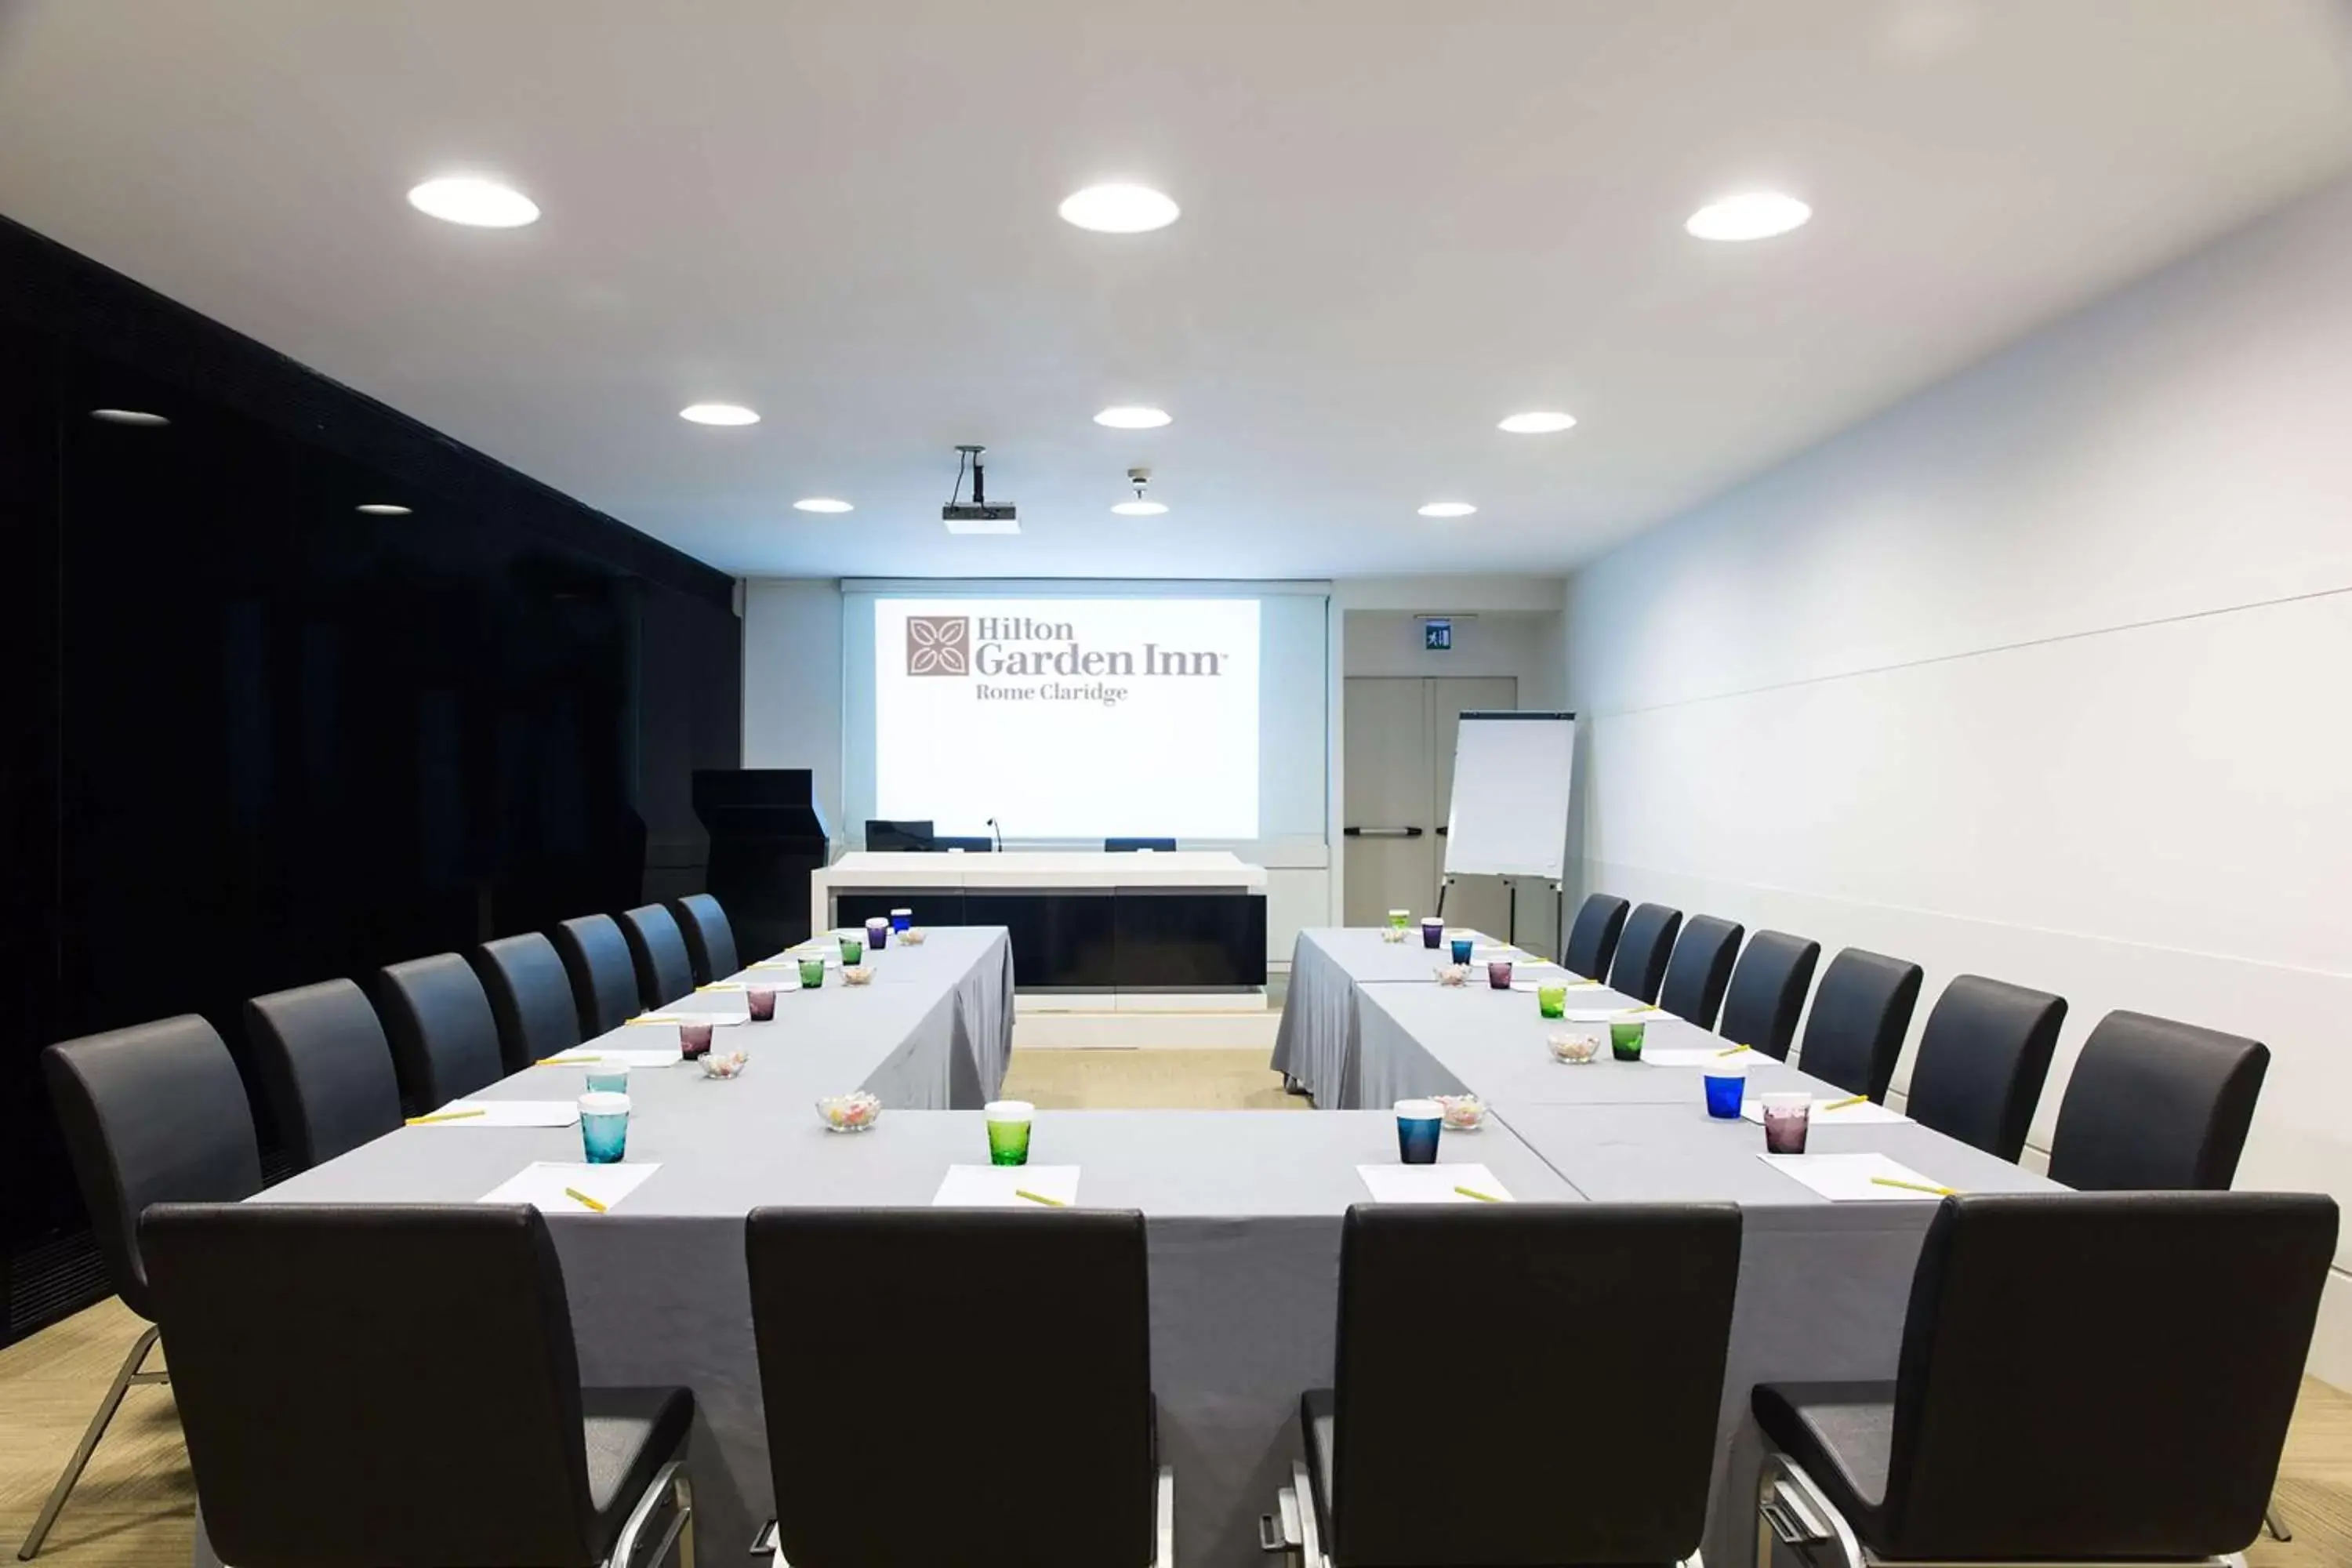 Meeting/conference room in Hilton Garden Inn Rome Claridge